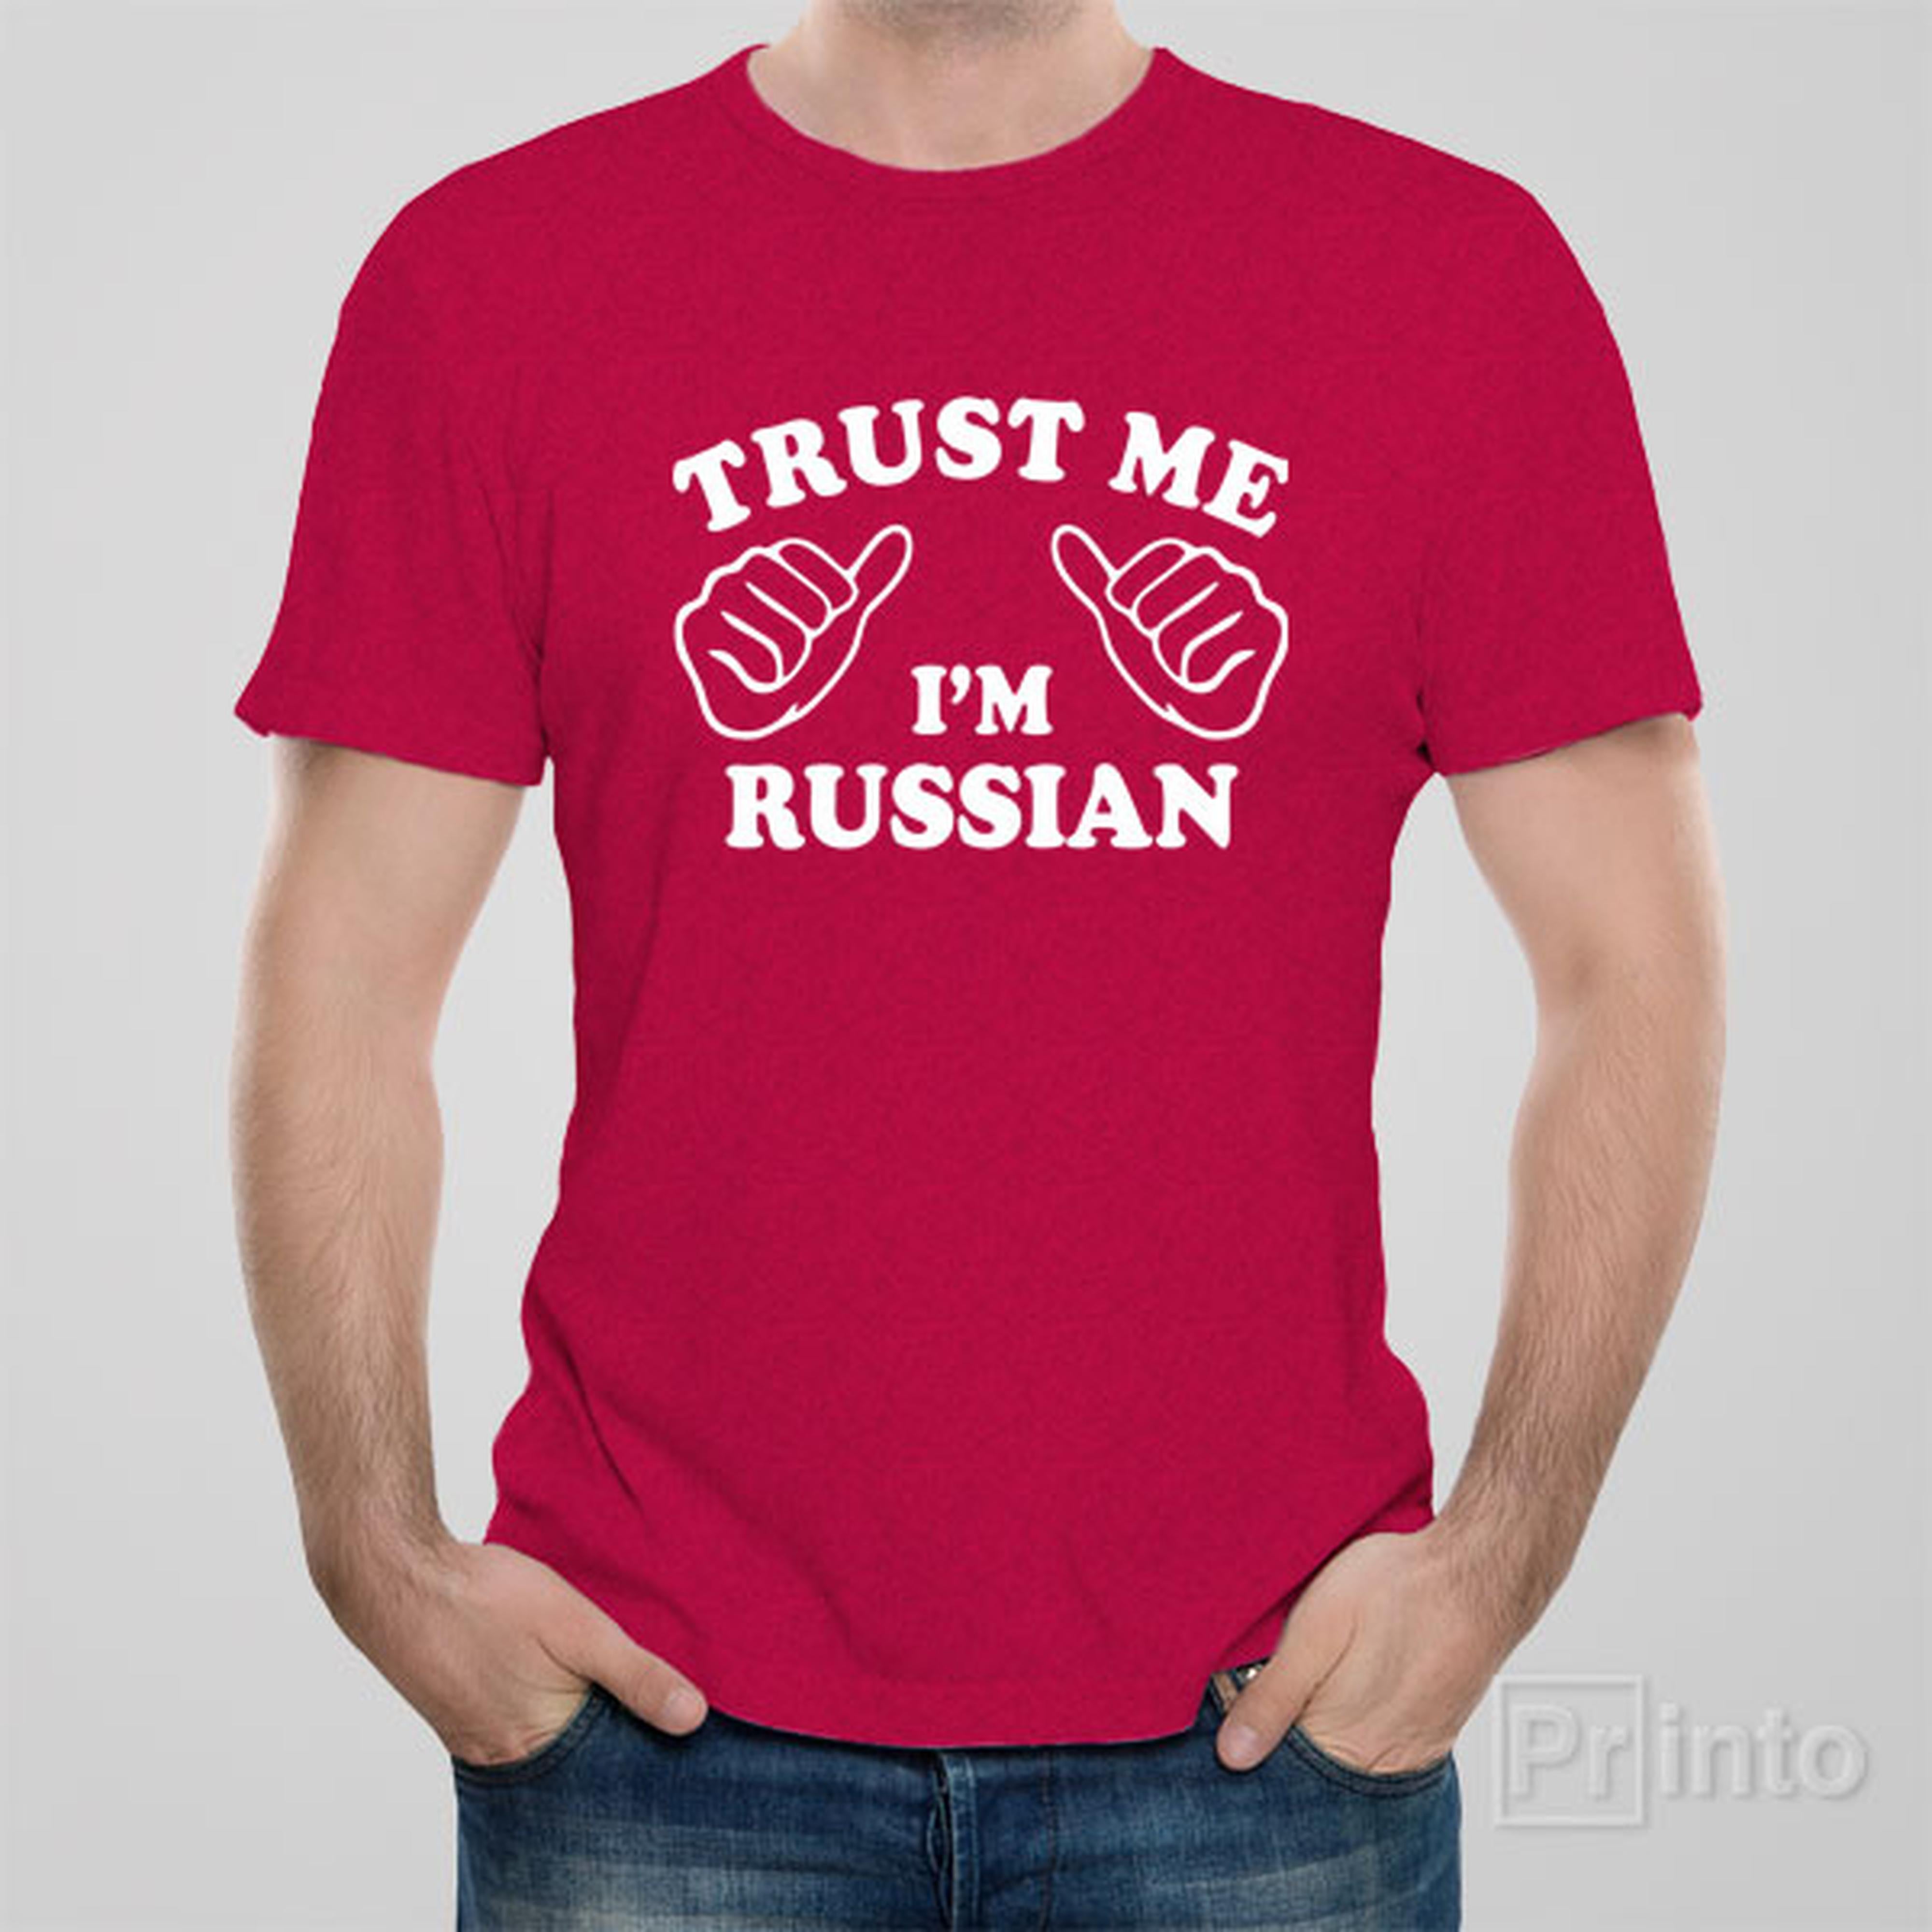 trust-me-i-am-russian-t-shirt